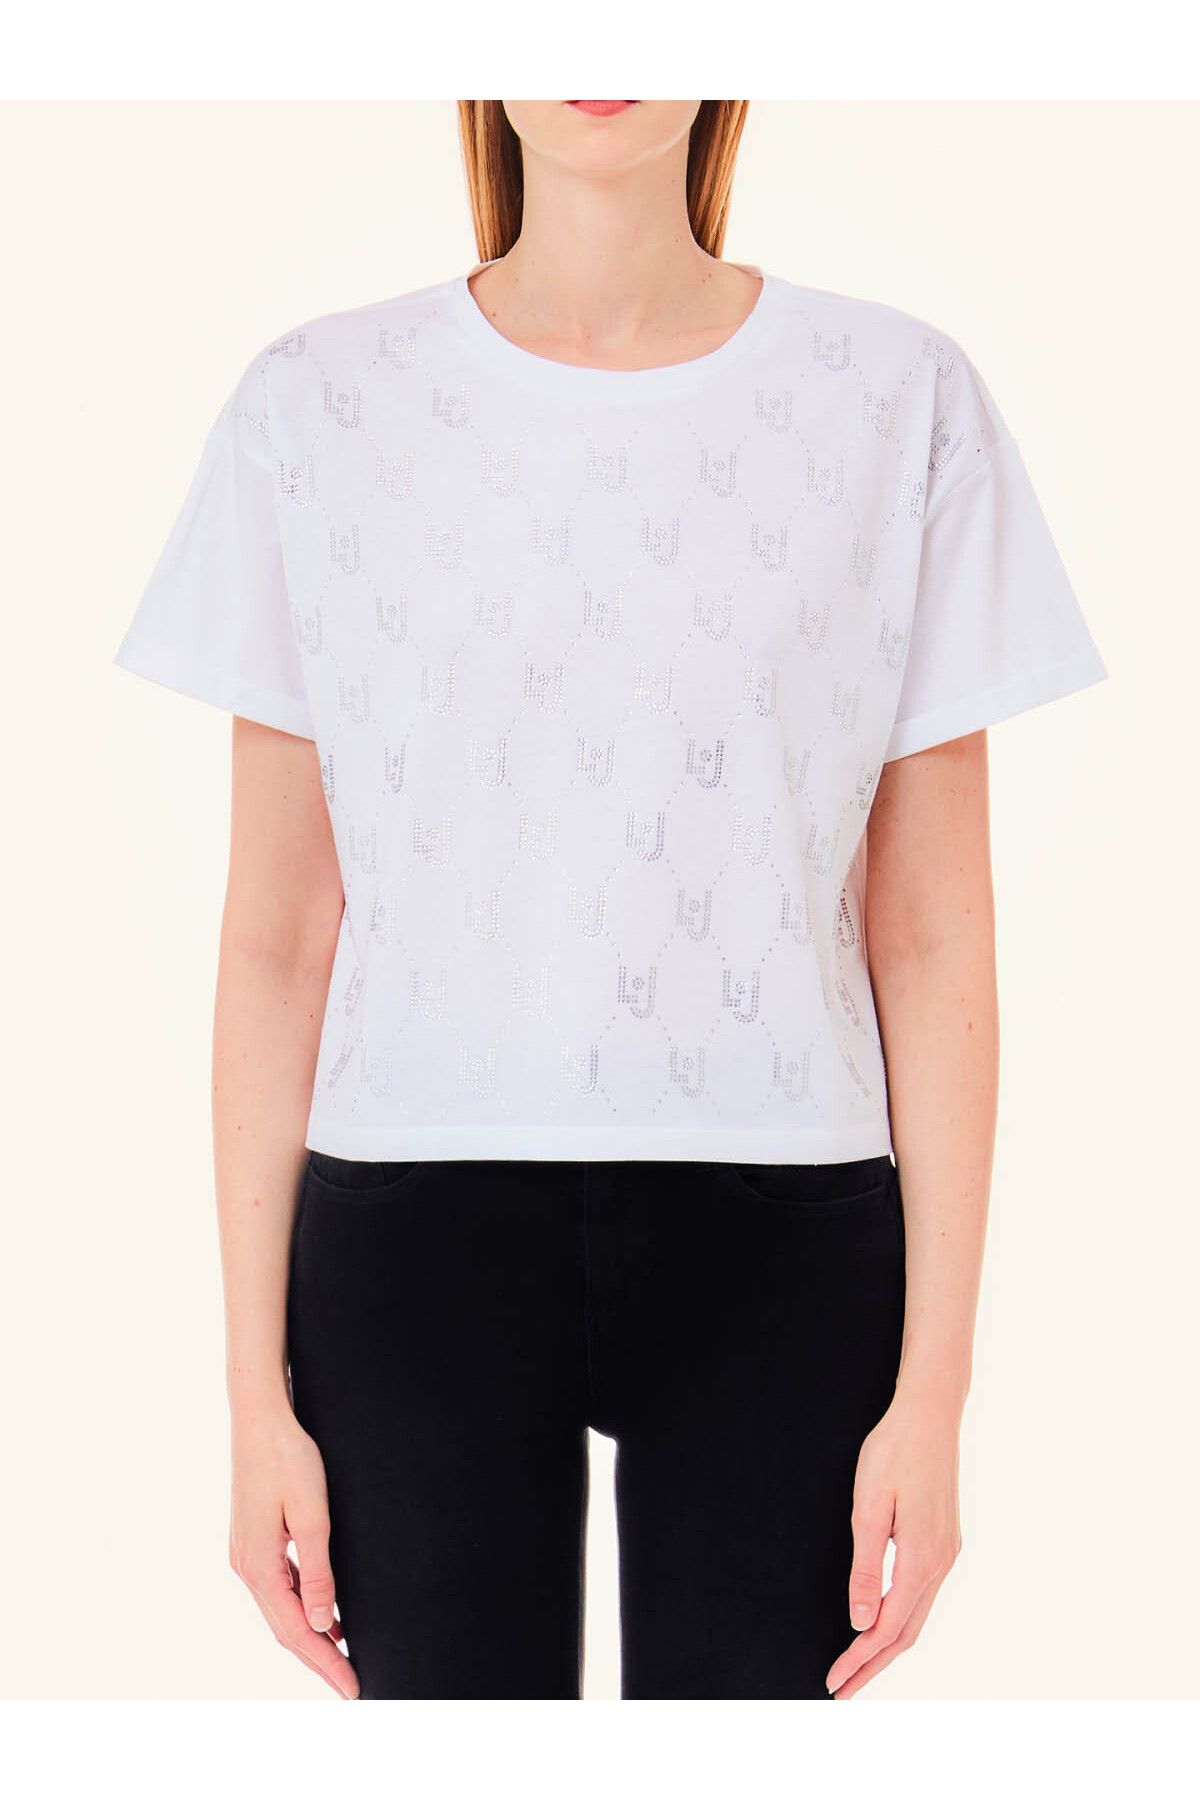 Liu Jo Kadın Marka Logolu Regular Fit Pamuklu Kısa Kol Beyaz T-Shirt MA4326J5904-N9274